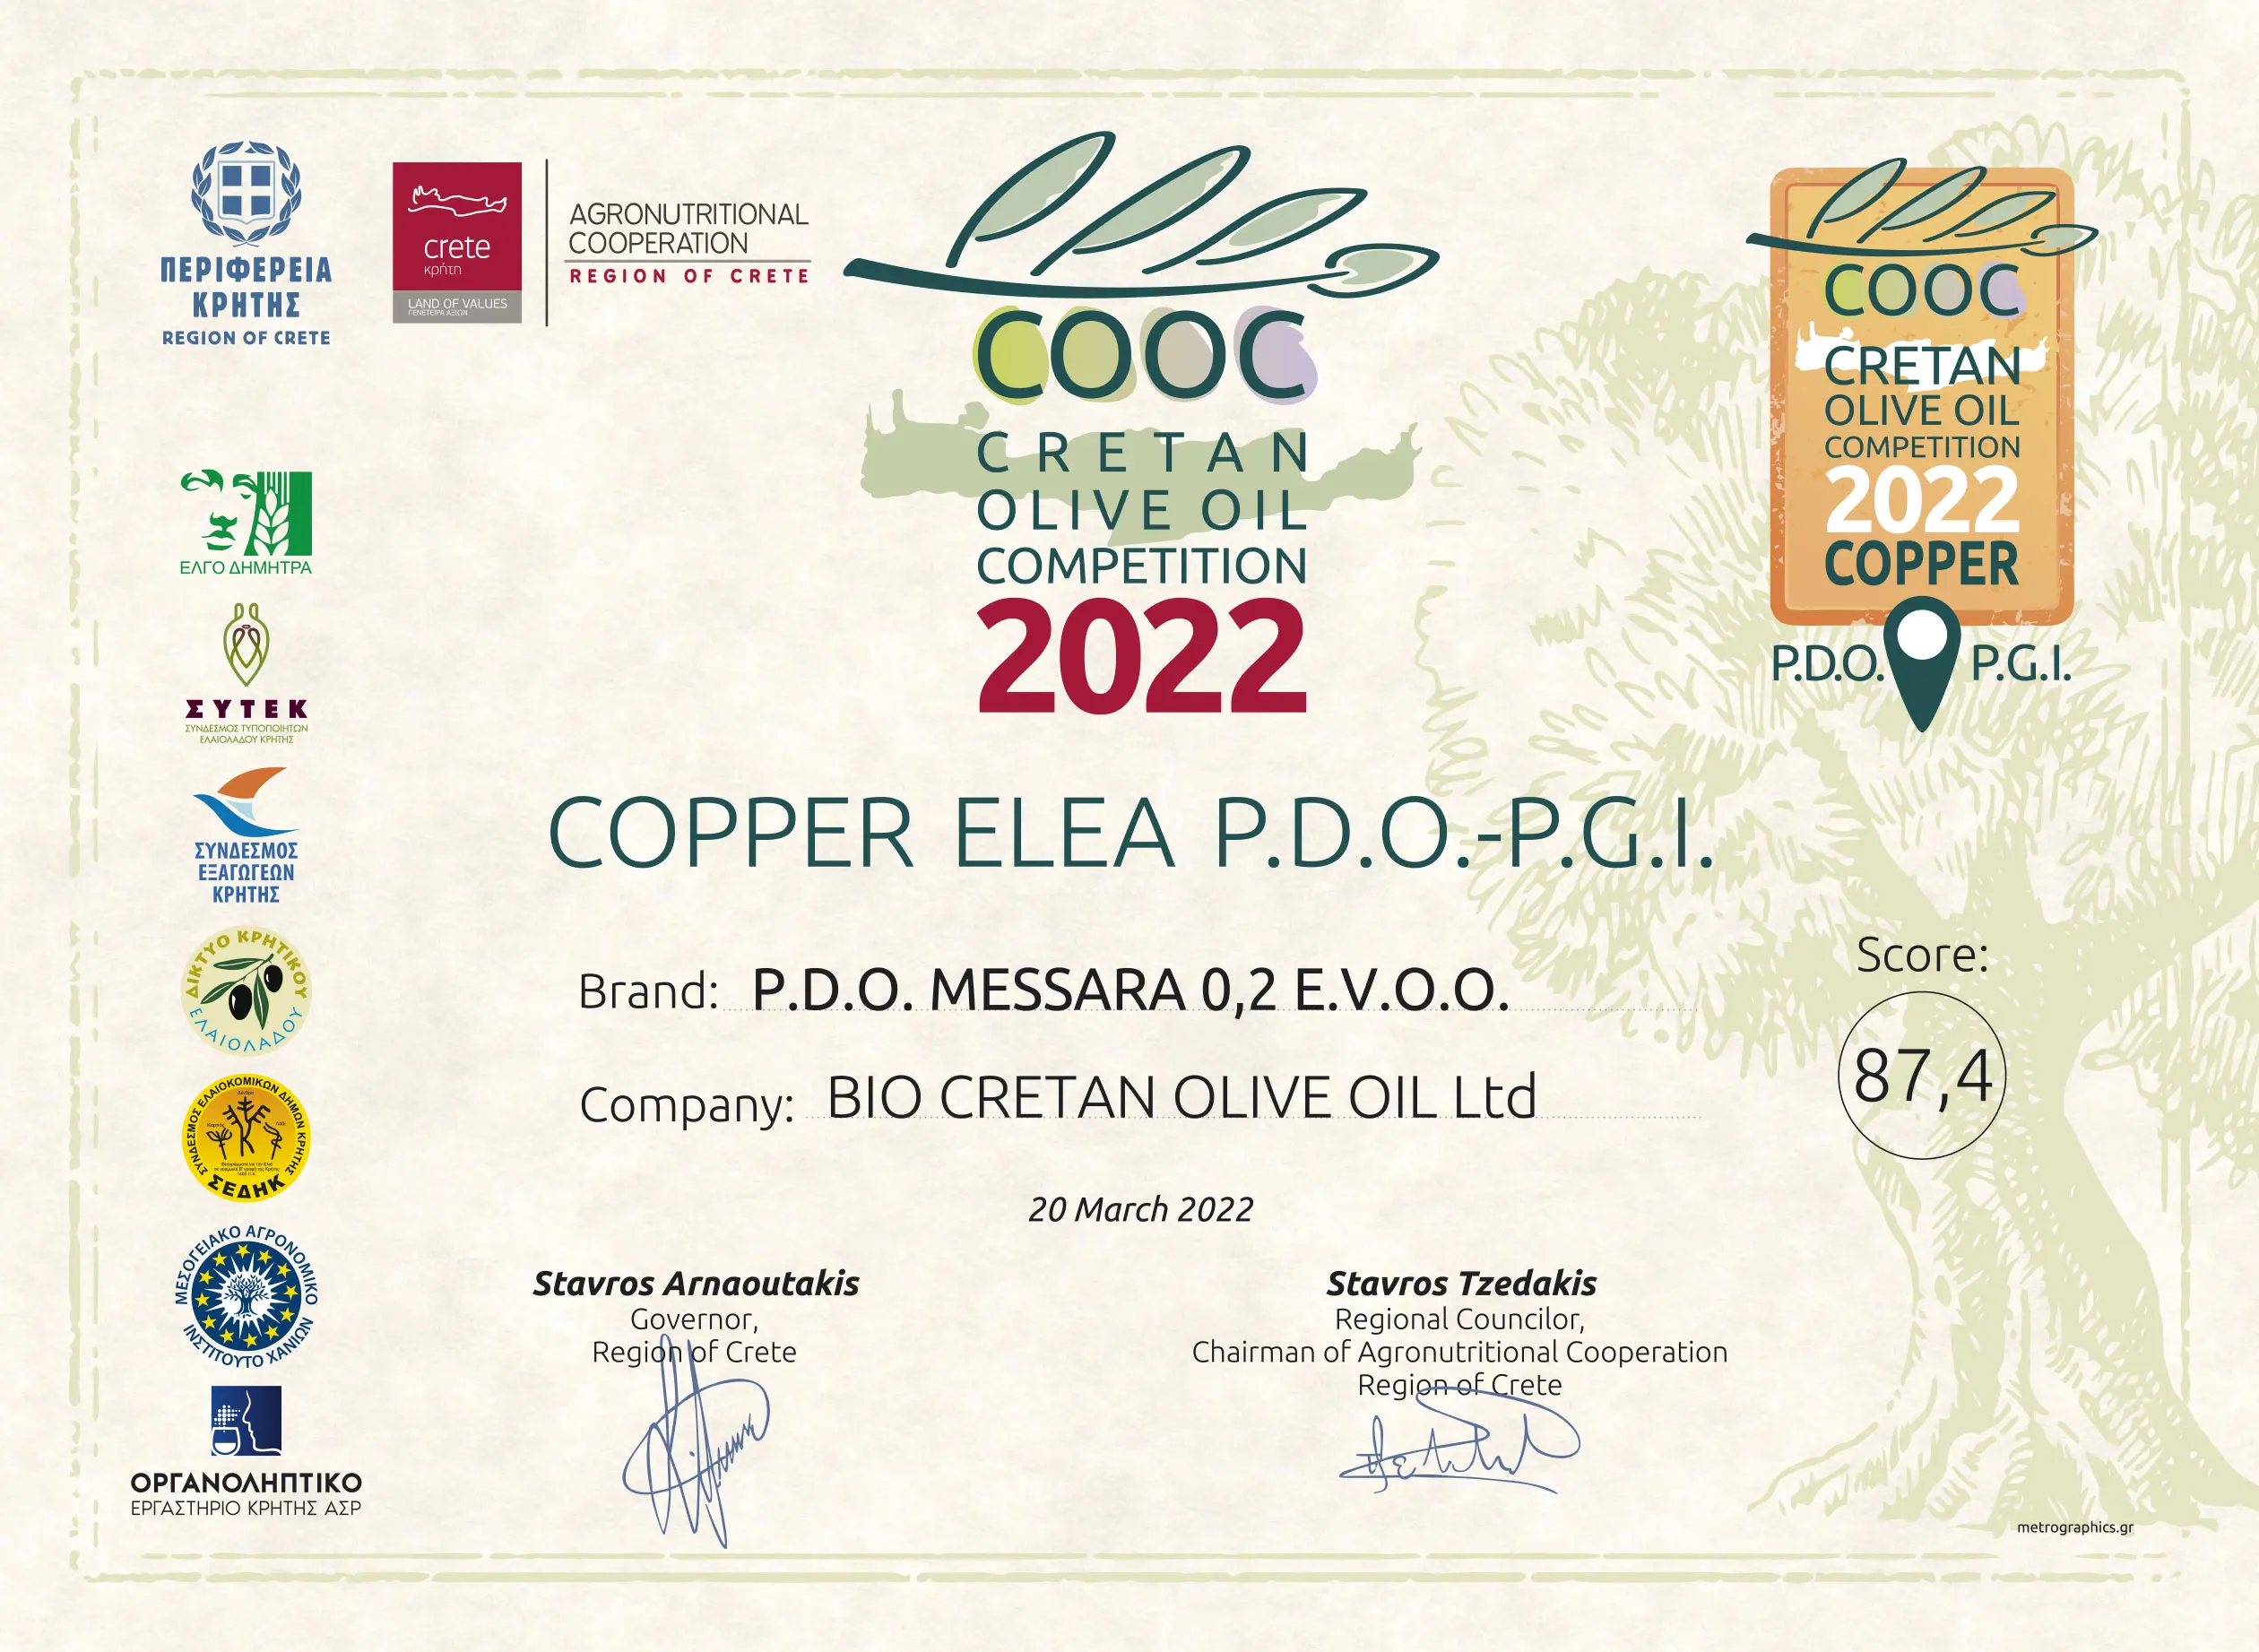 COOC - Cretan Olive Oil competition